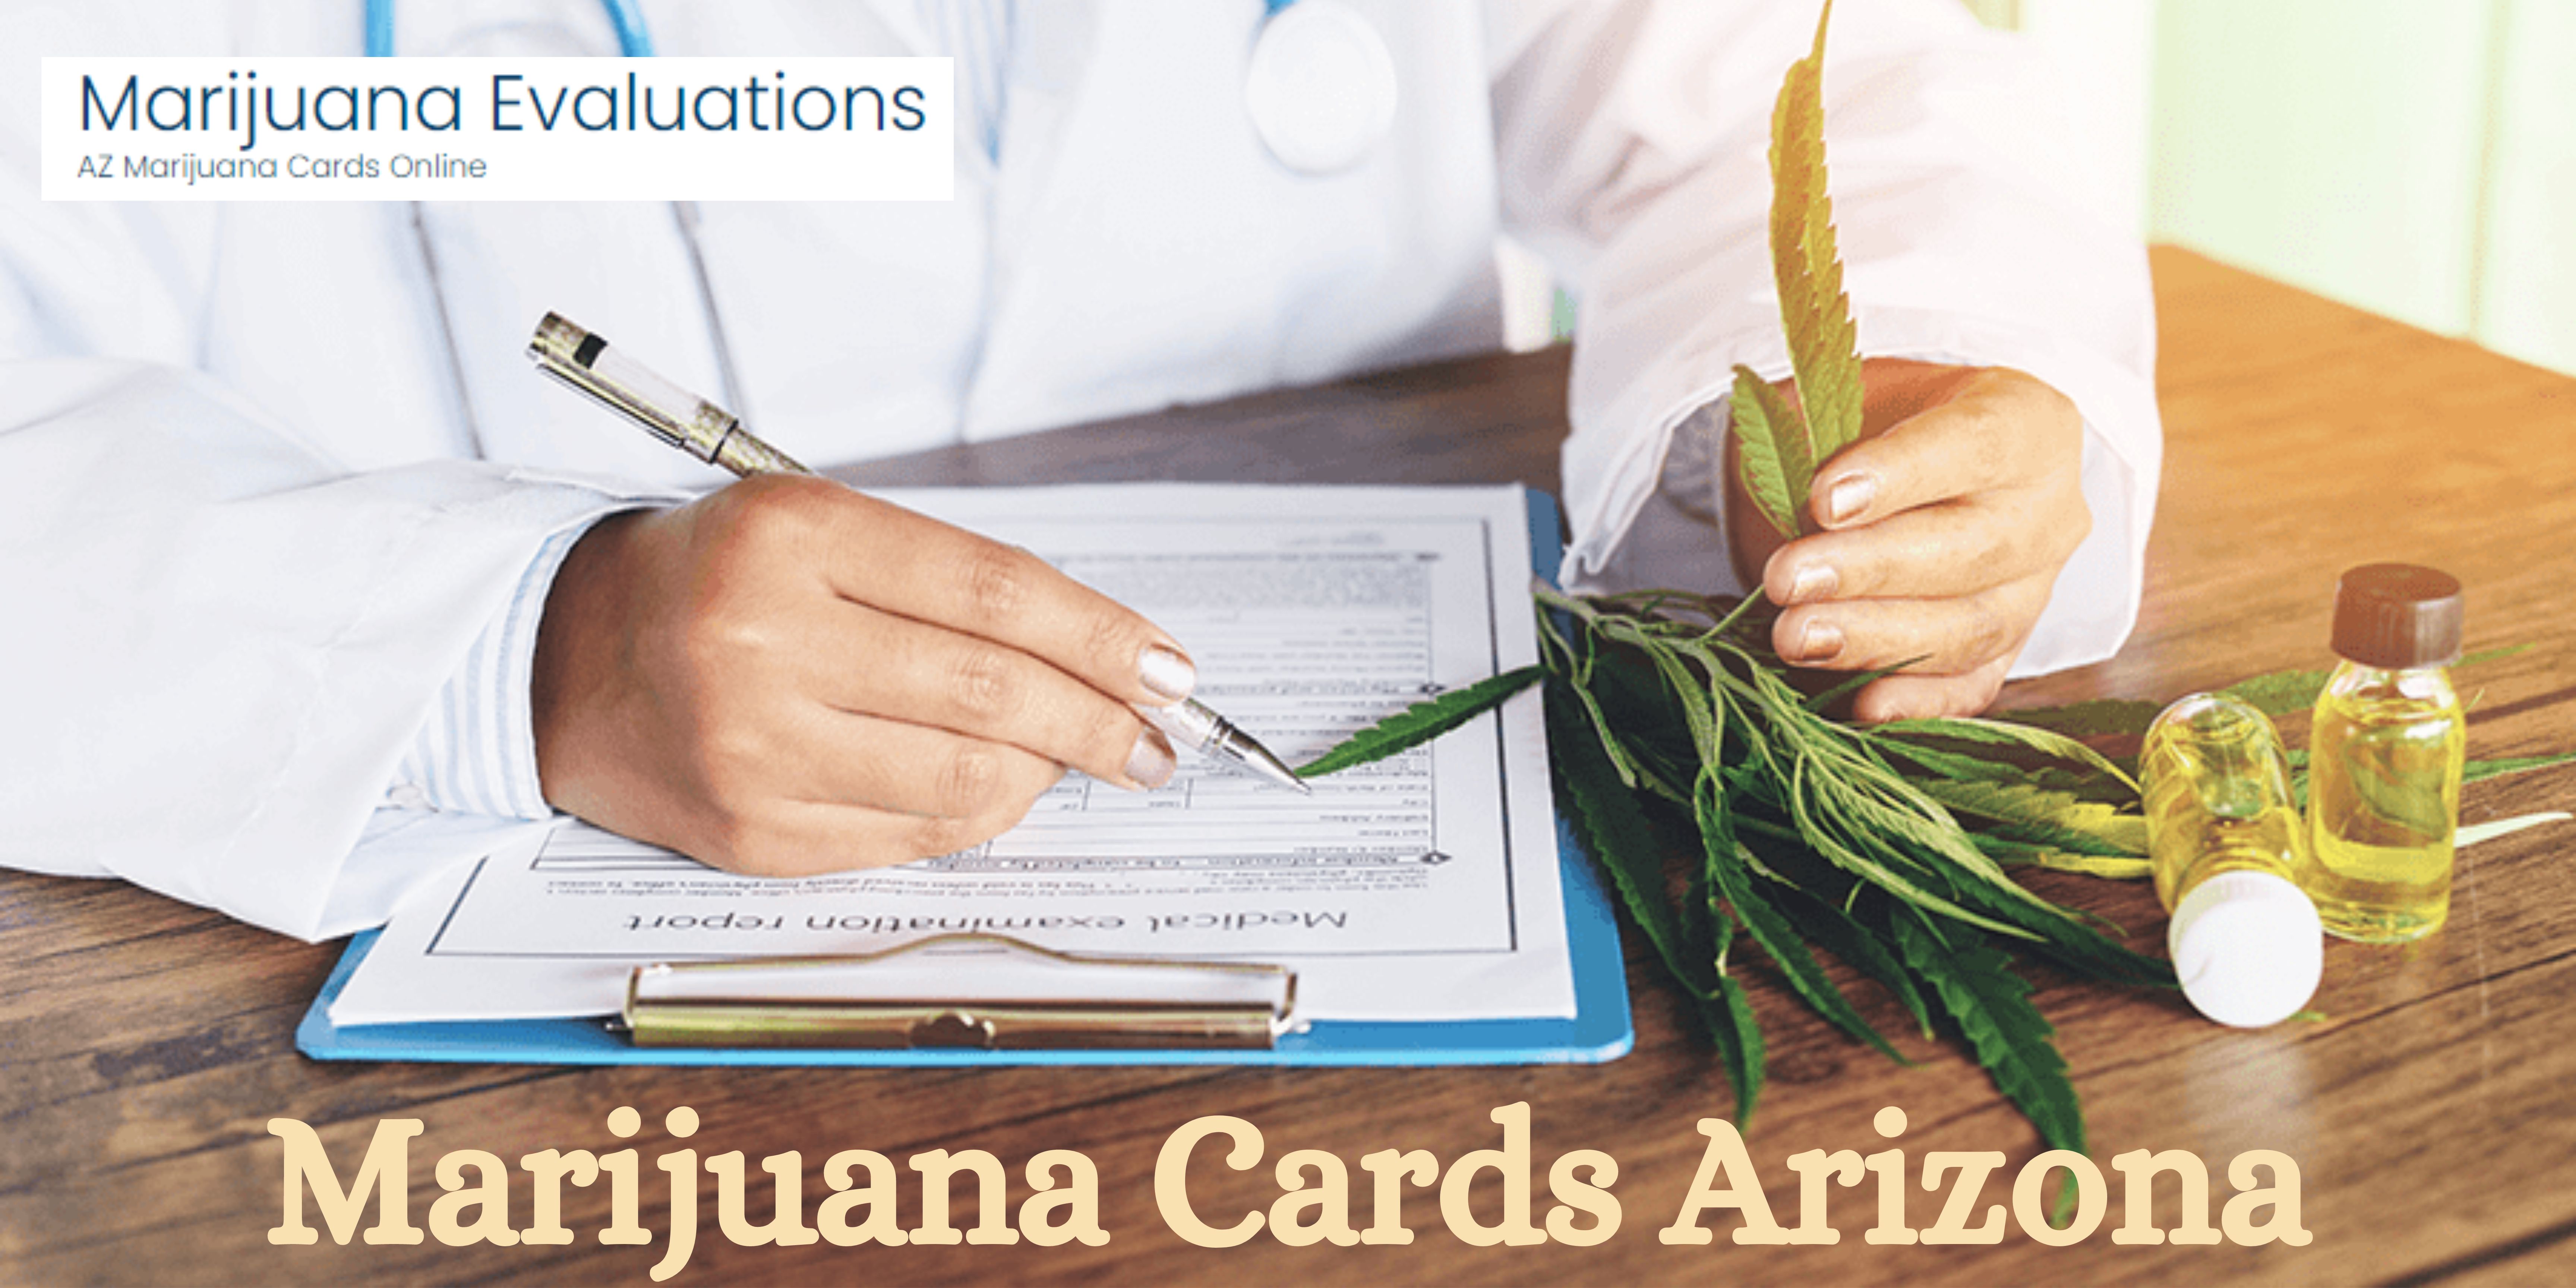 Unlocking Relief: Marijuana Evaluations Offer Access to Arizona Marijuana Cards, Online Event